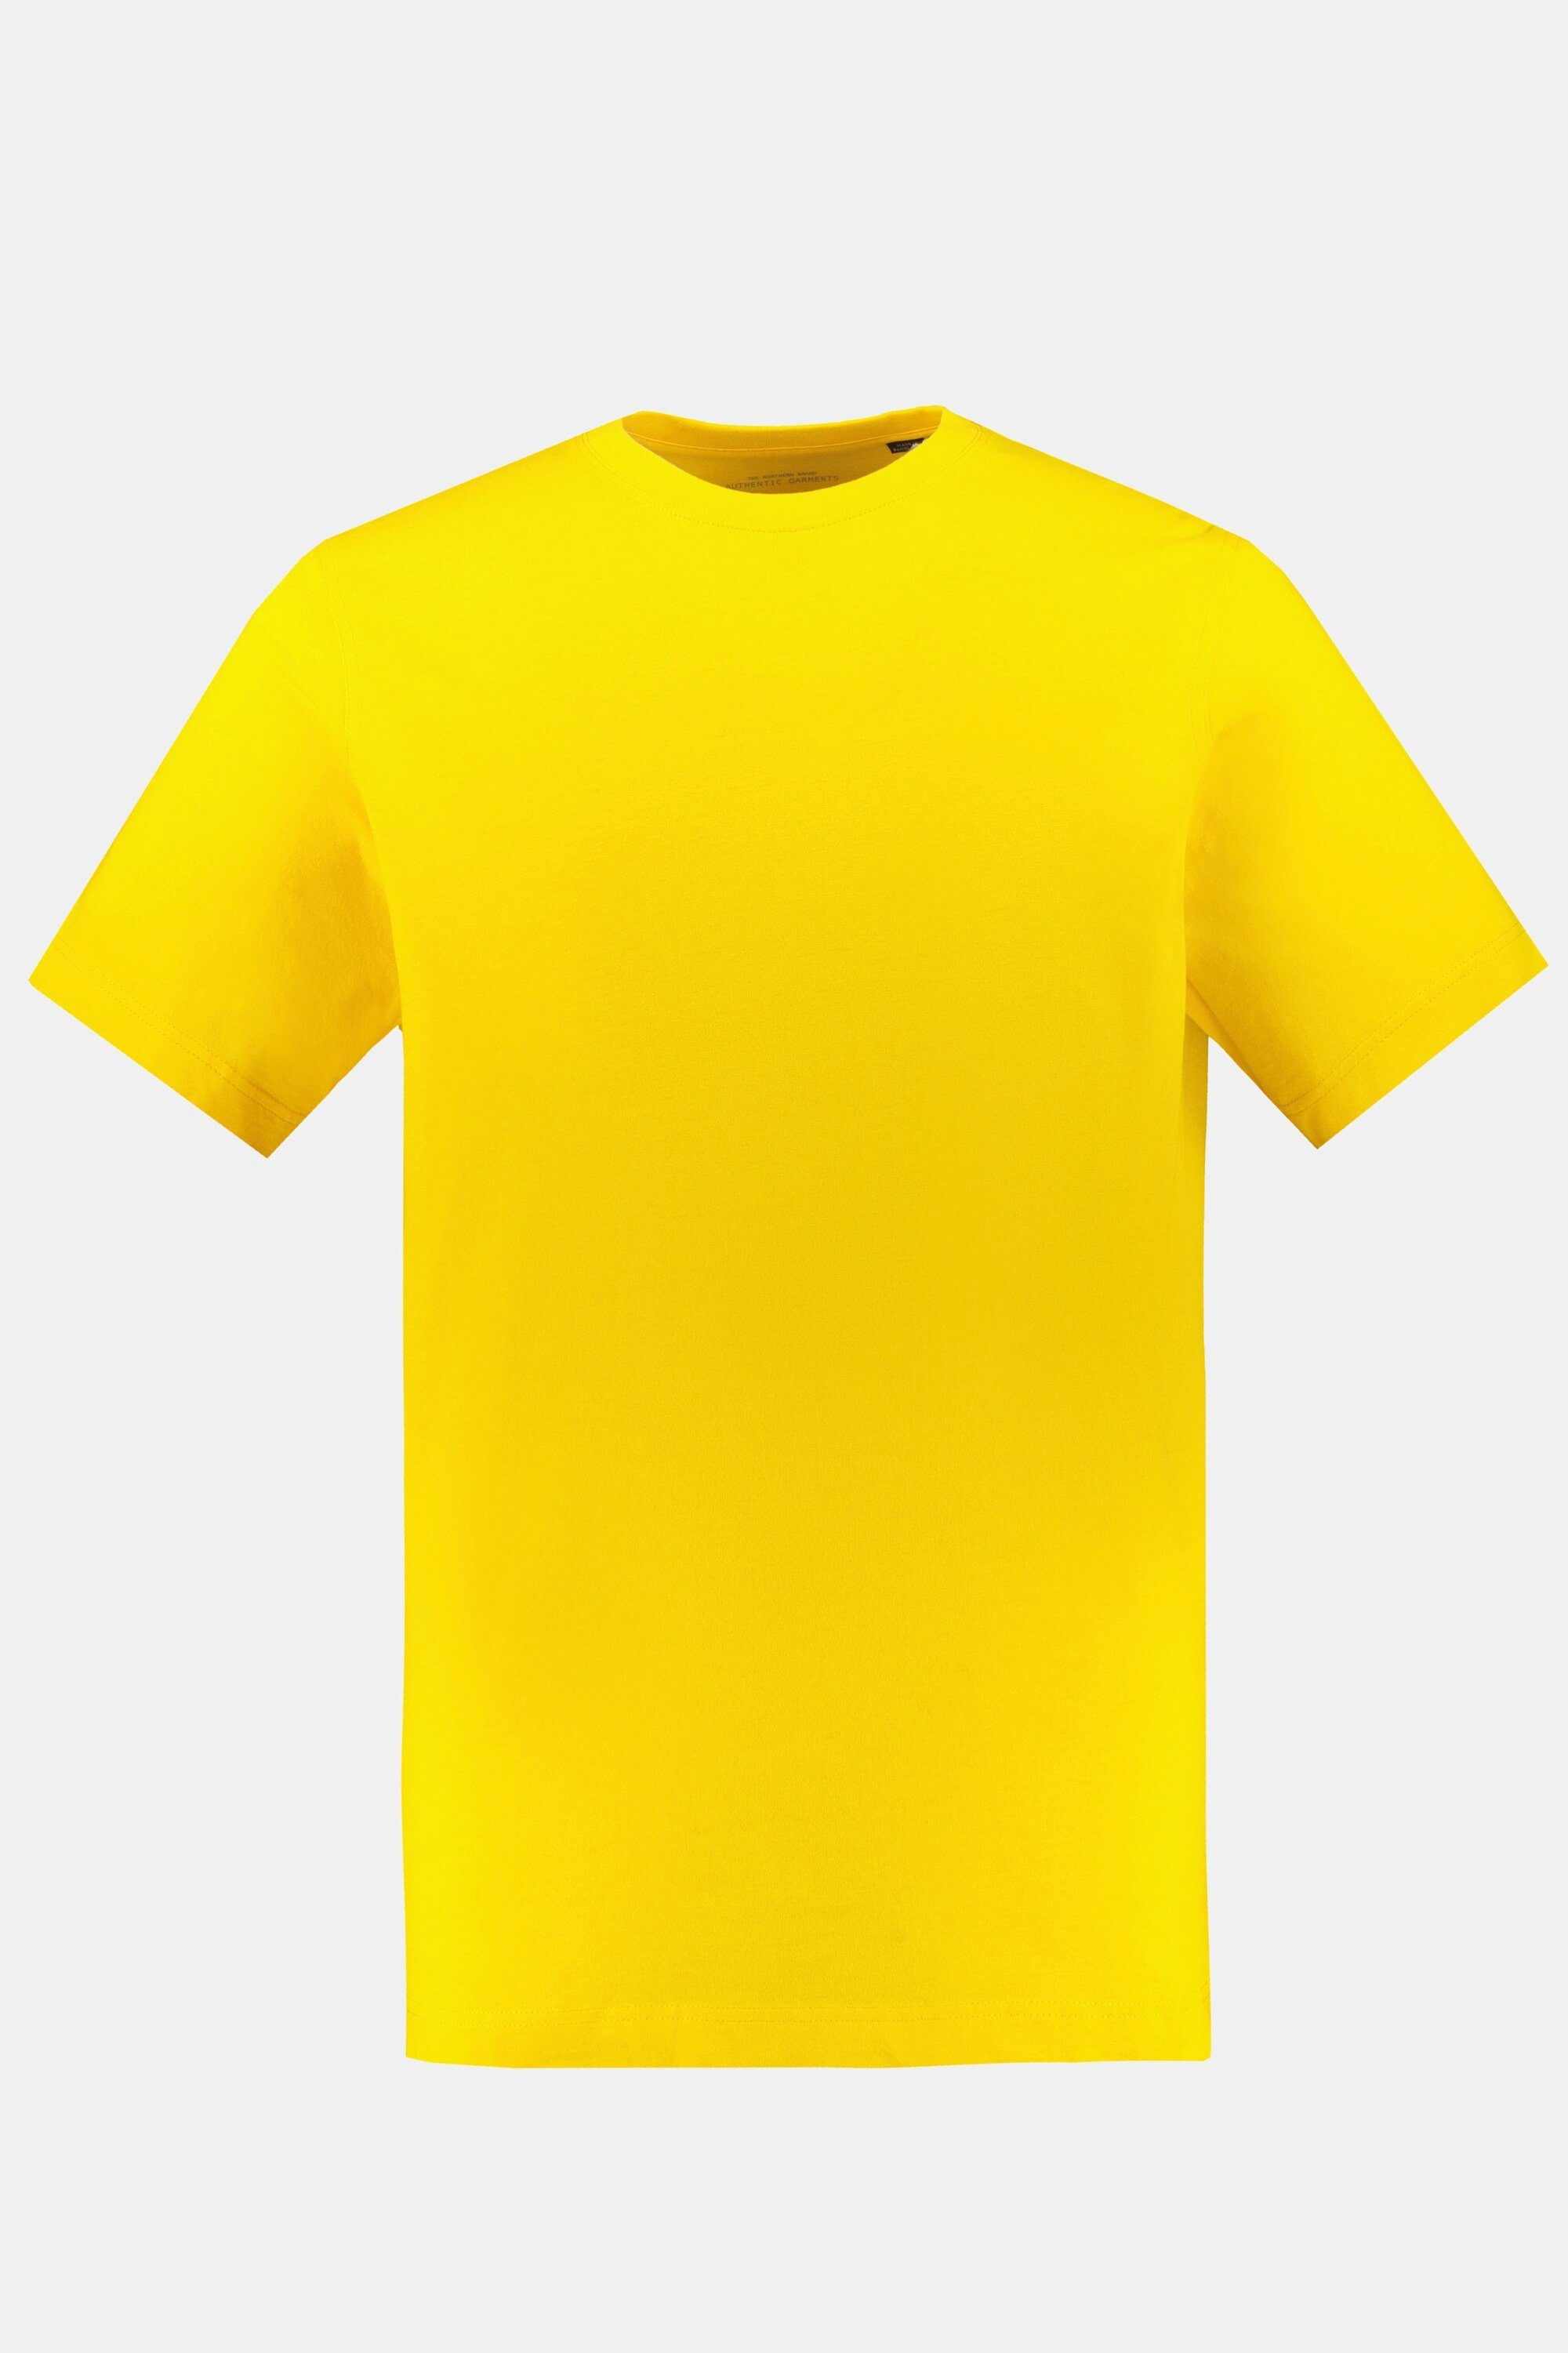 korngelb T-Shirt Rundhals Baumwolle 8XL T-Shirt Basic JP1880 gekämmte bis